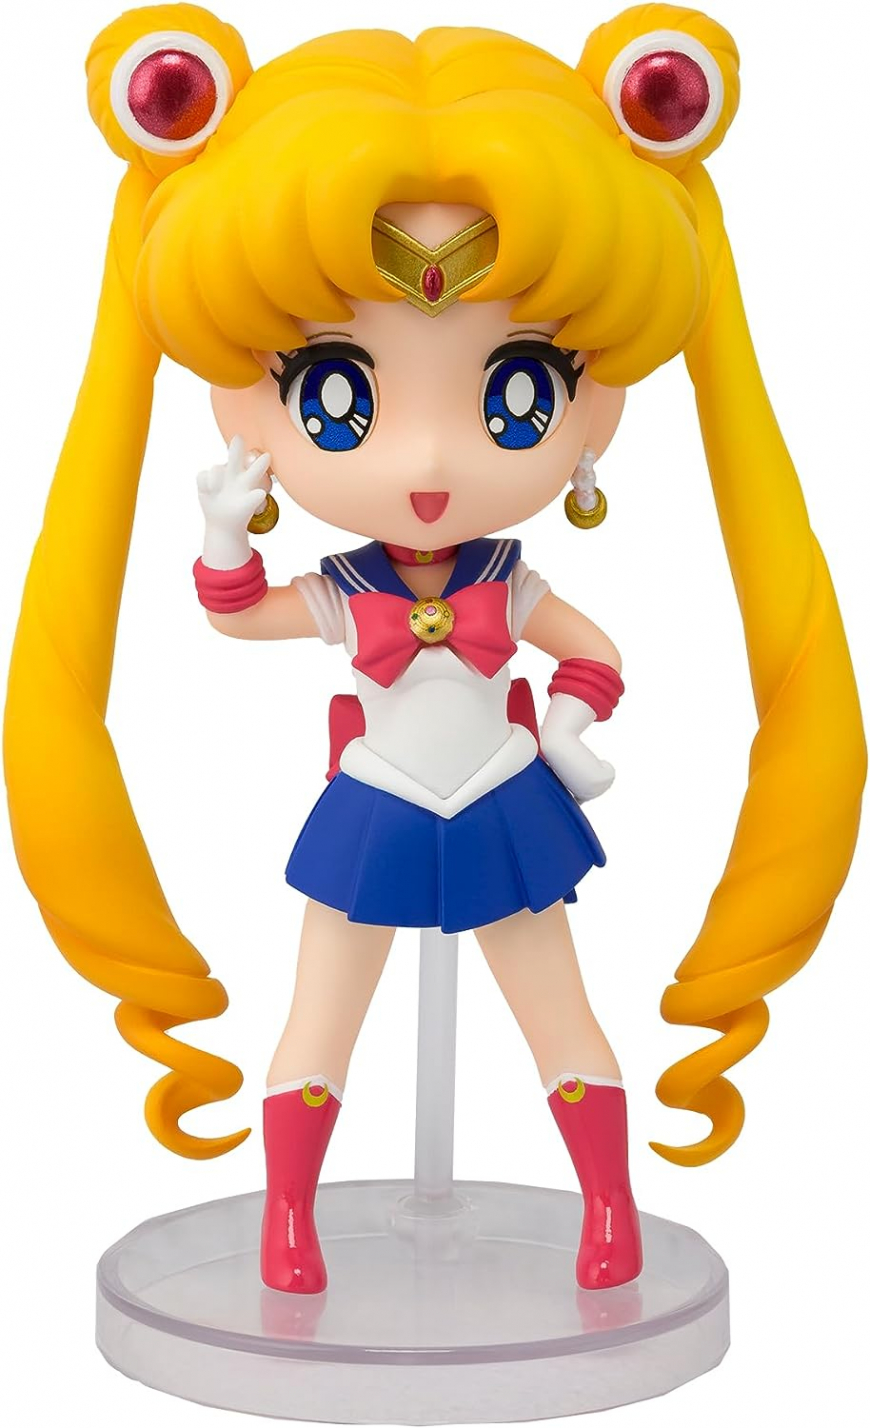 Figuarts Mini Sailor Moon figure